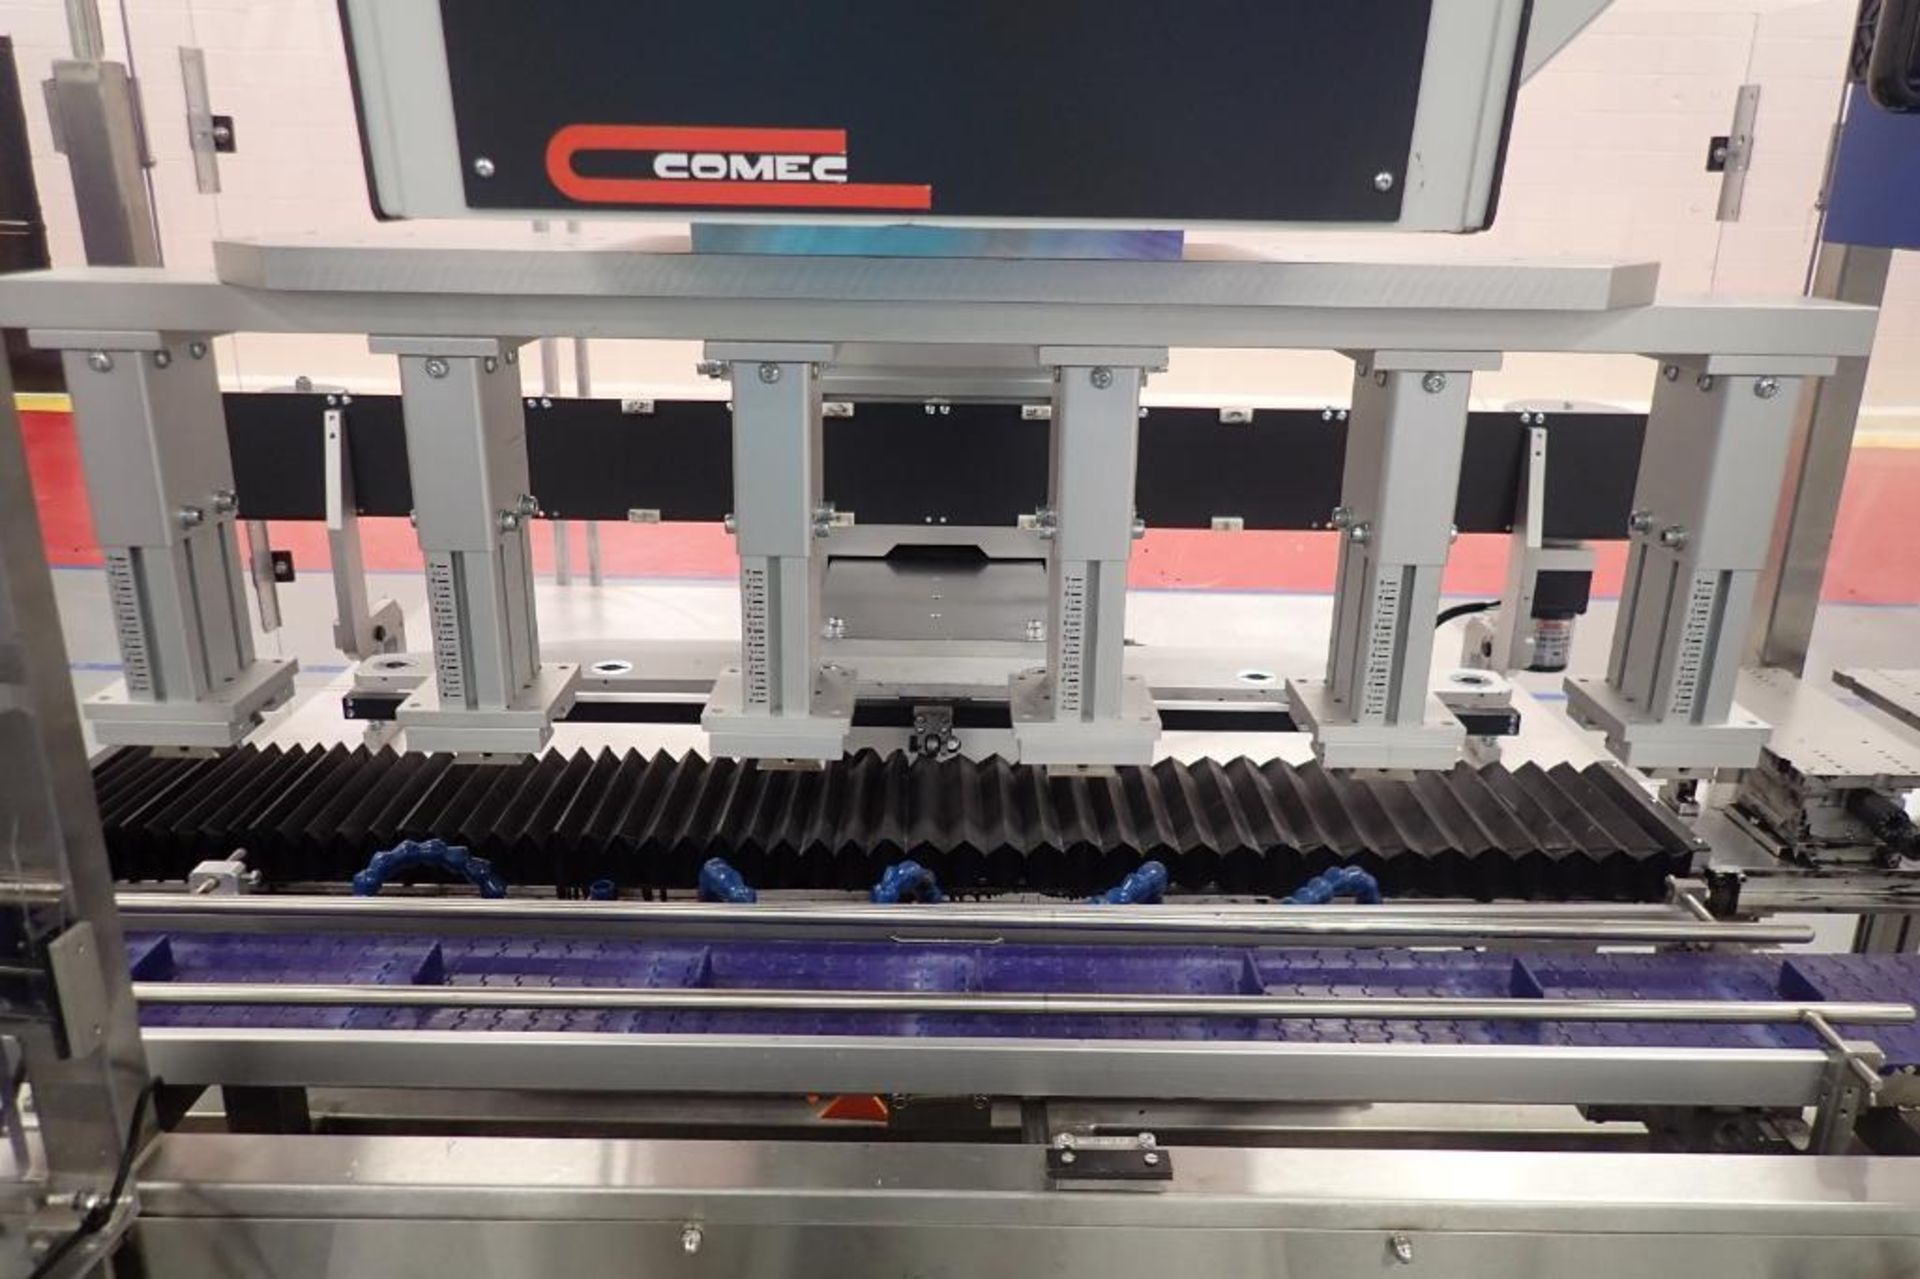 2015 Comec pad printing machine, Model KE166CE130, SN 10617, 6 spot, Allen Bradley panelview plus - Image 8 of 32